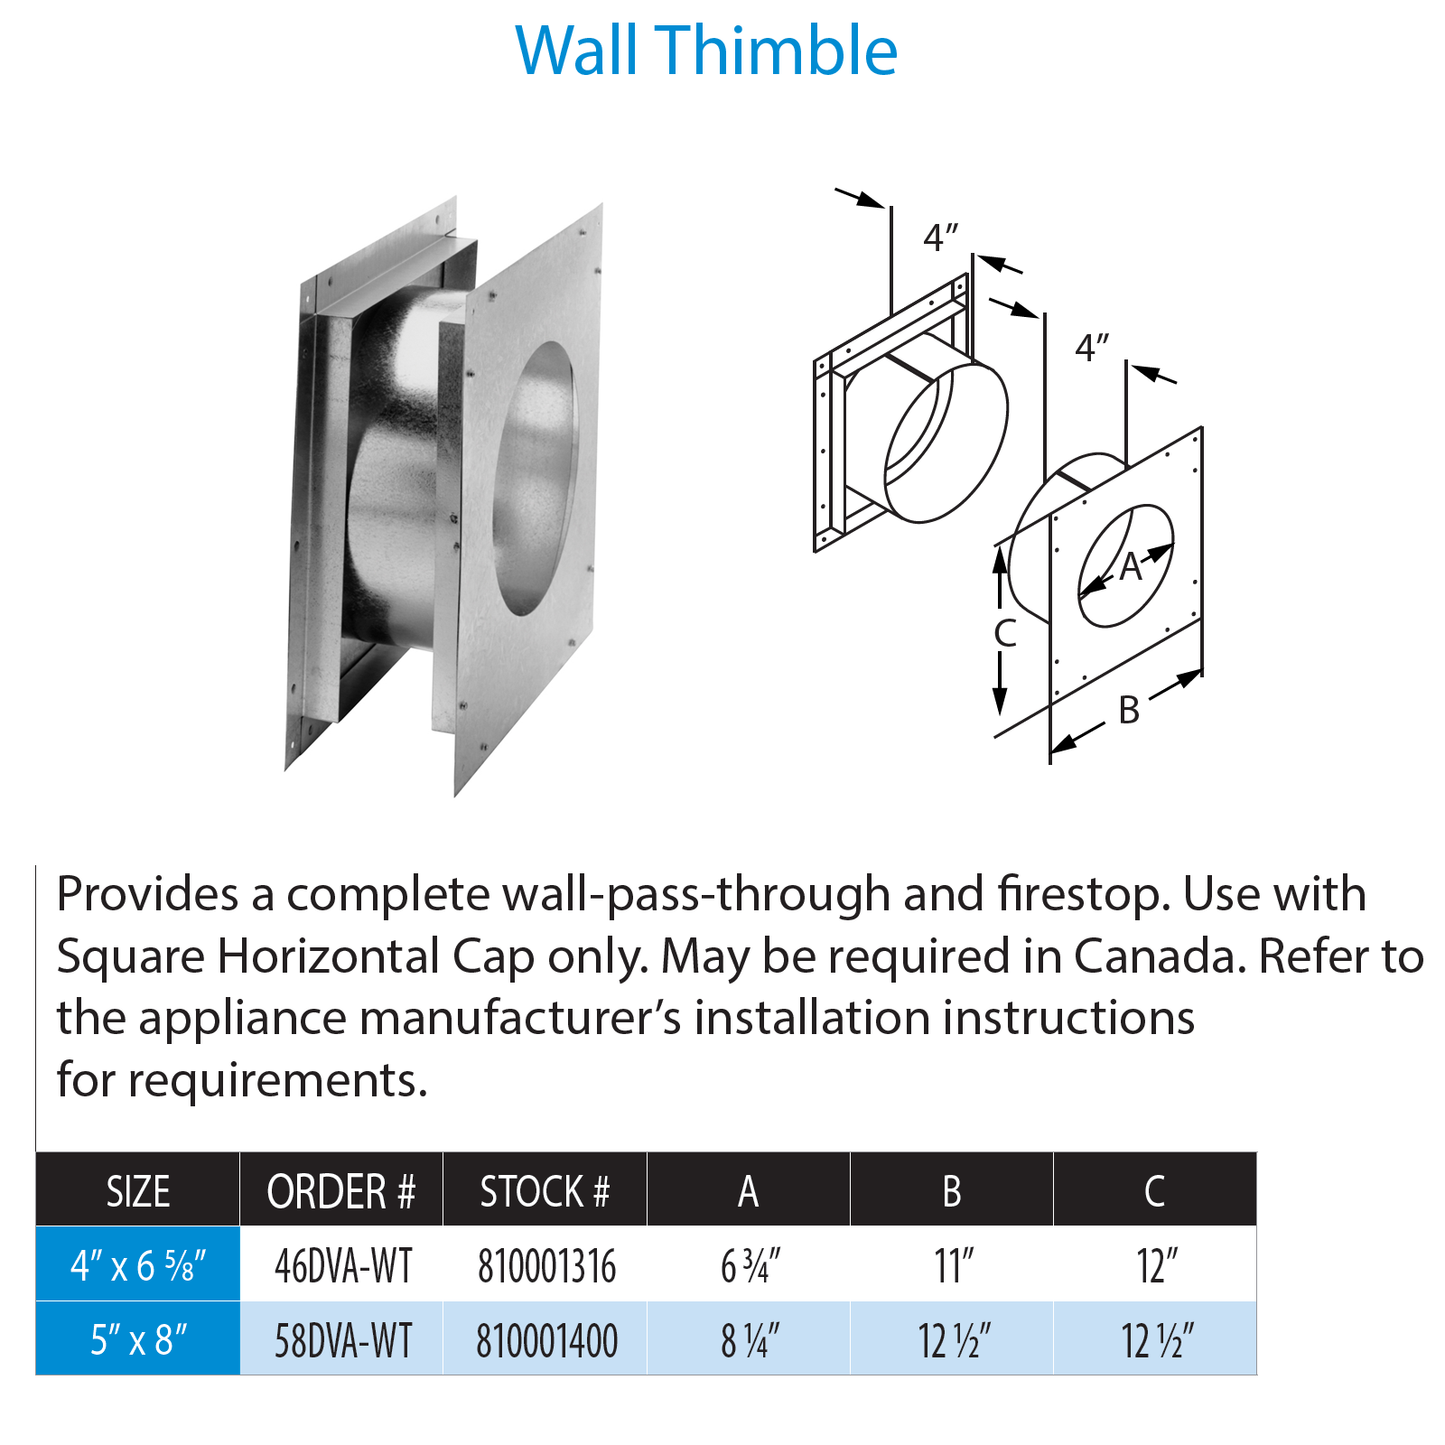 DuraVent DirectVent Pro Wall Thimble | 58DVA-WT